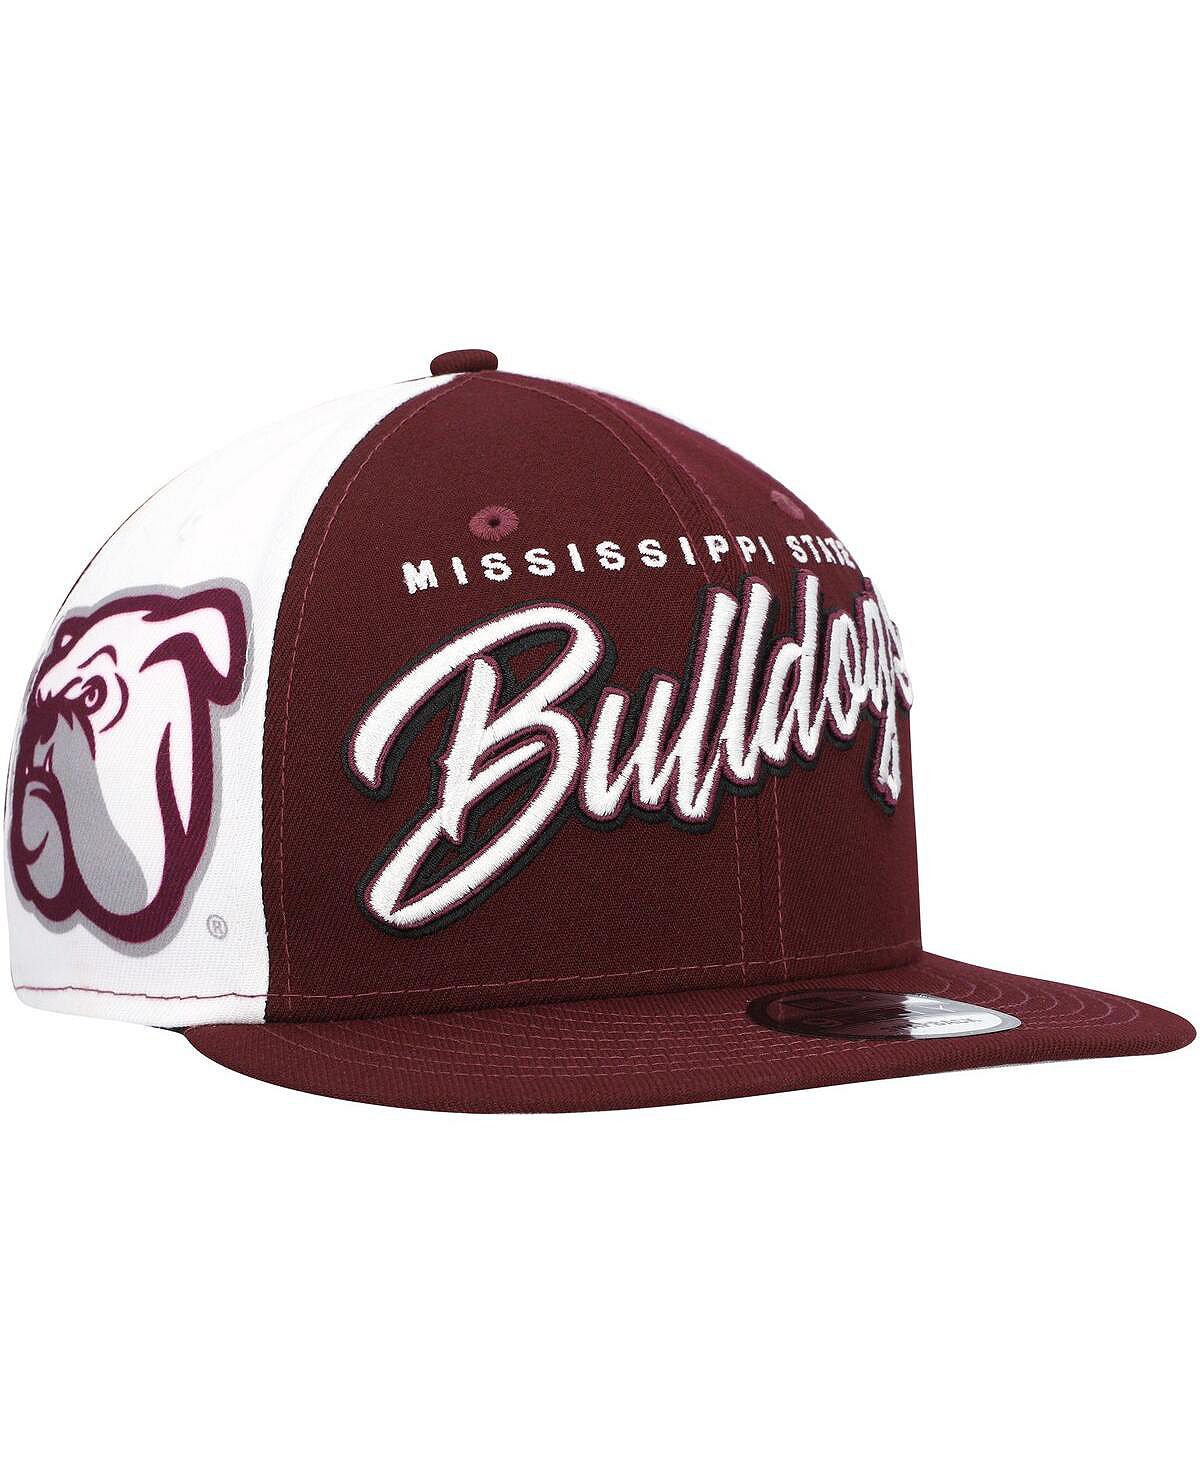 Мужская темно-бордовая кепка Mississippi State Bulldogs Outright 9FIFTY Snapback New Era